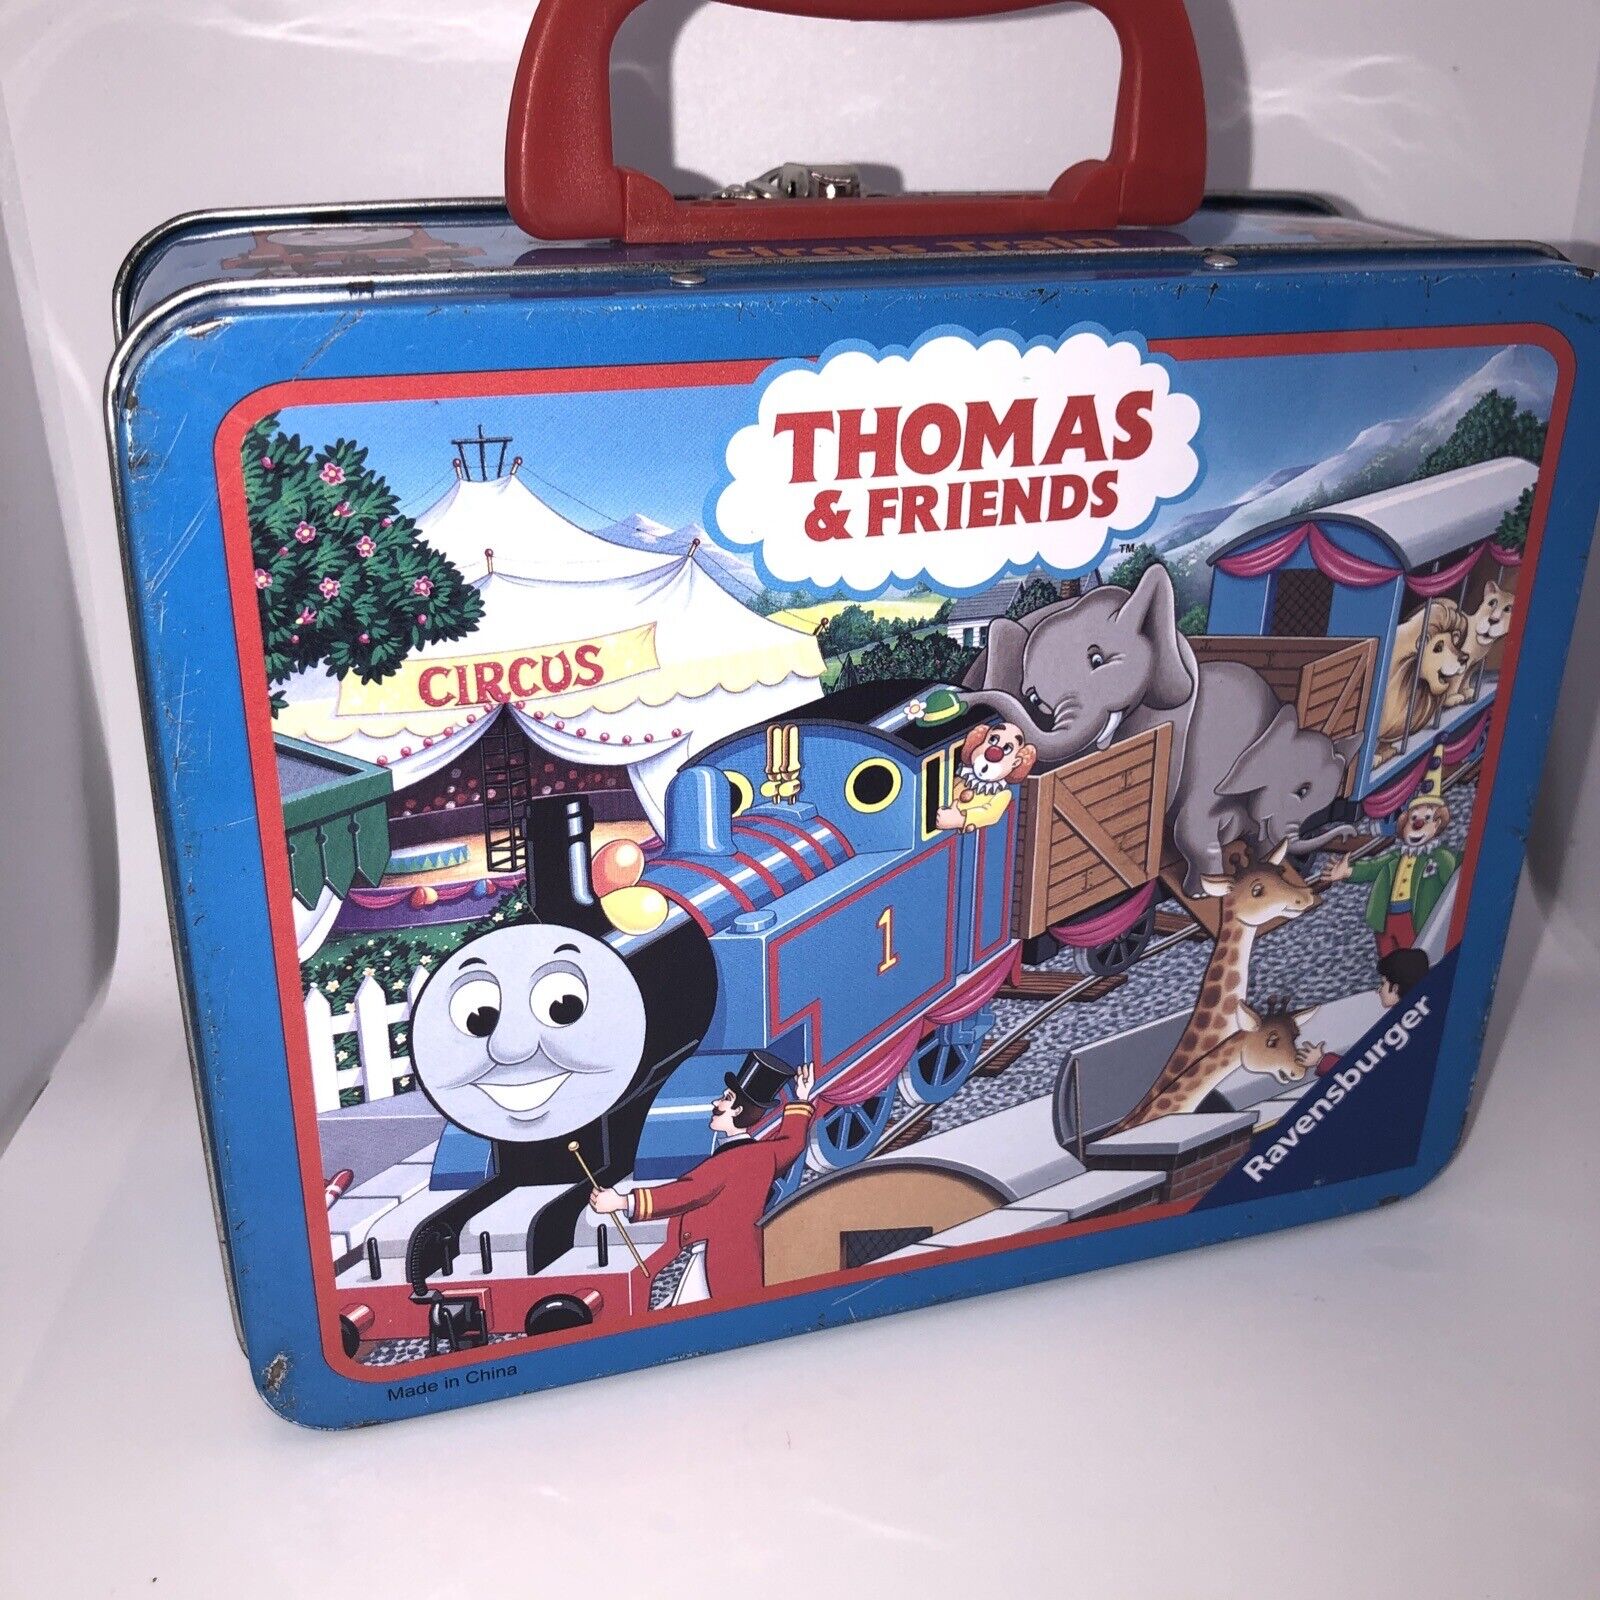 Thomas the Train & Friends Vintage Ravensburger Sodor Circus Tin Lunch Box 2002